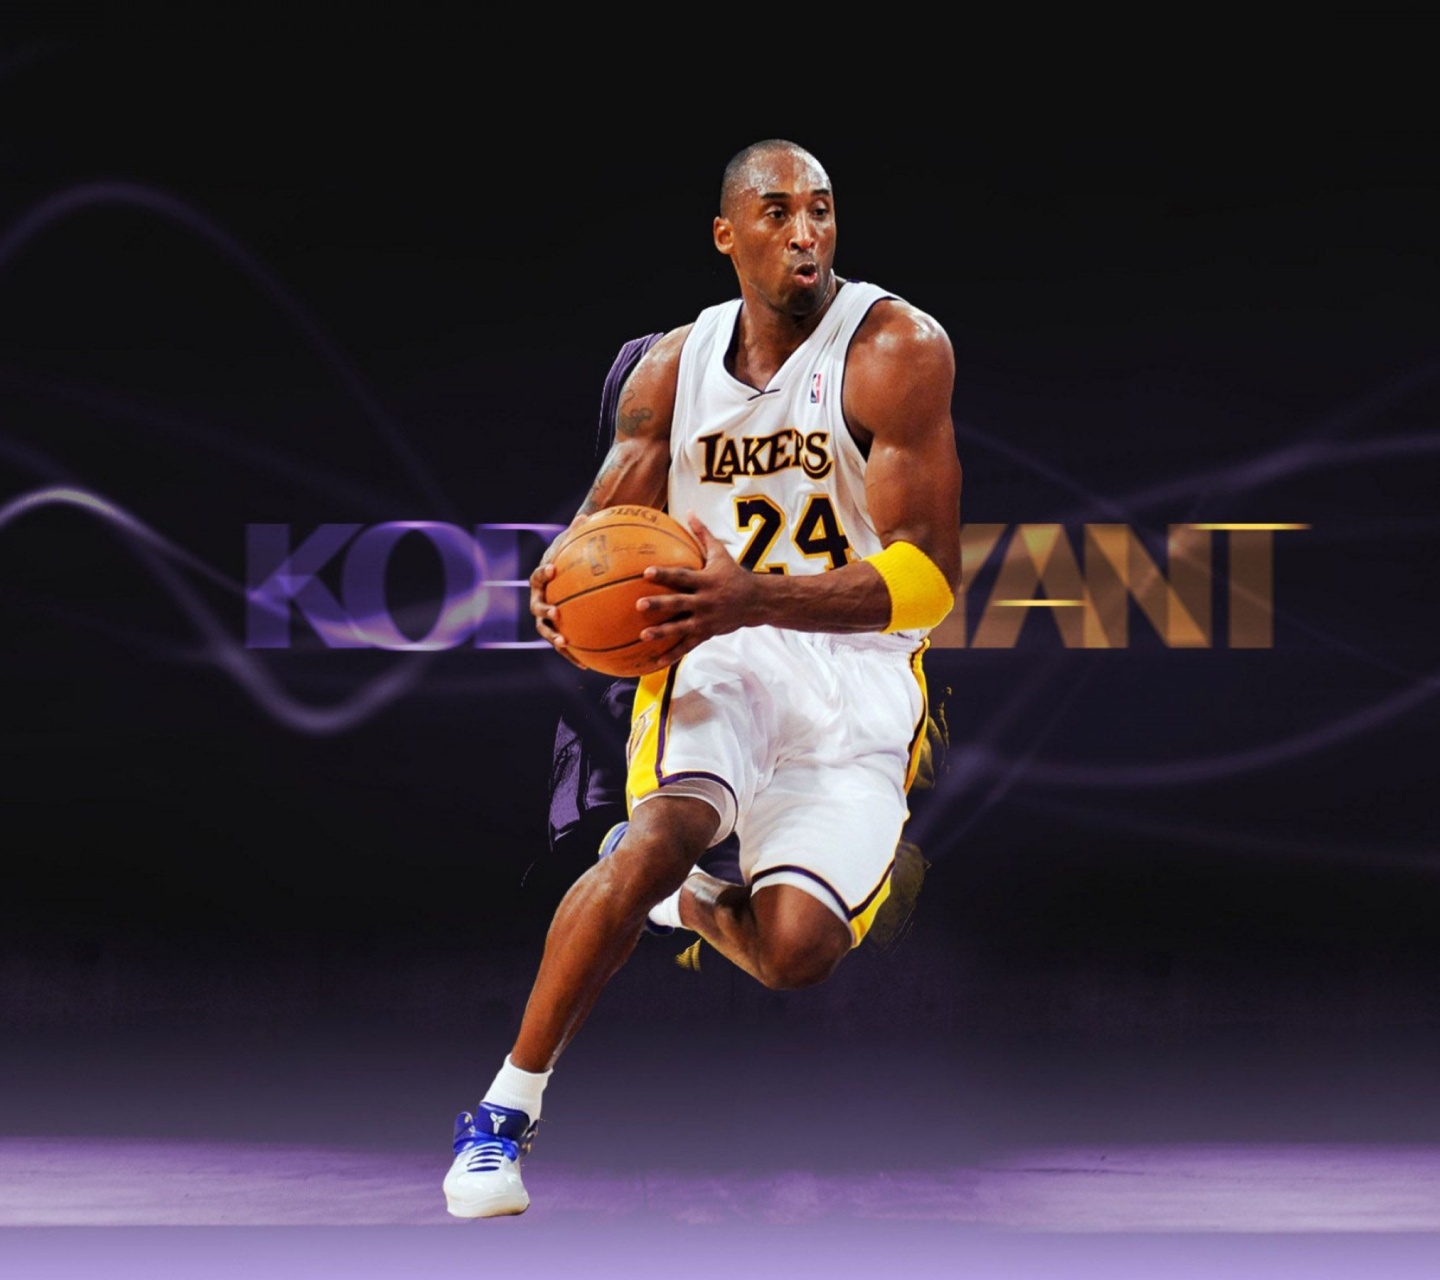 Kobe Bryant - NBA SuperStar